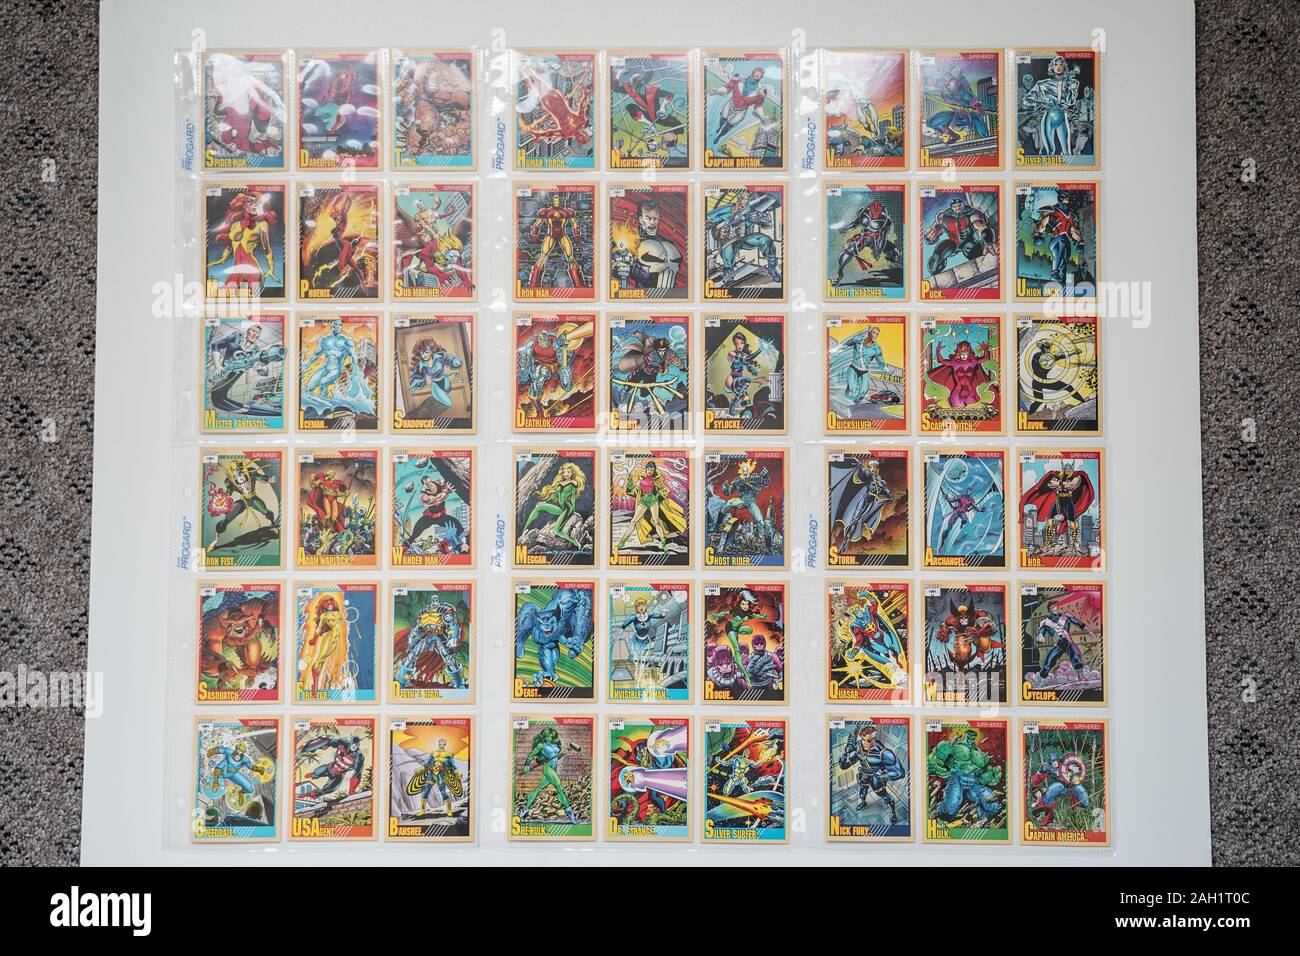 Superhero Cards High Resolution Stock Photography and Images - Alamy Regarding Superhero Trading Card Template